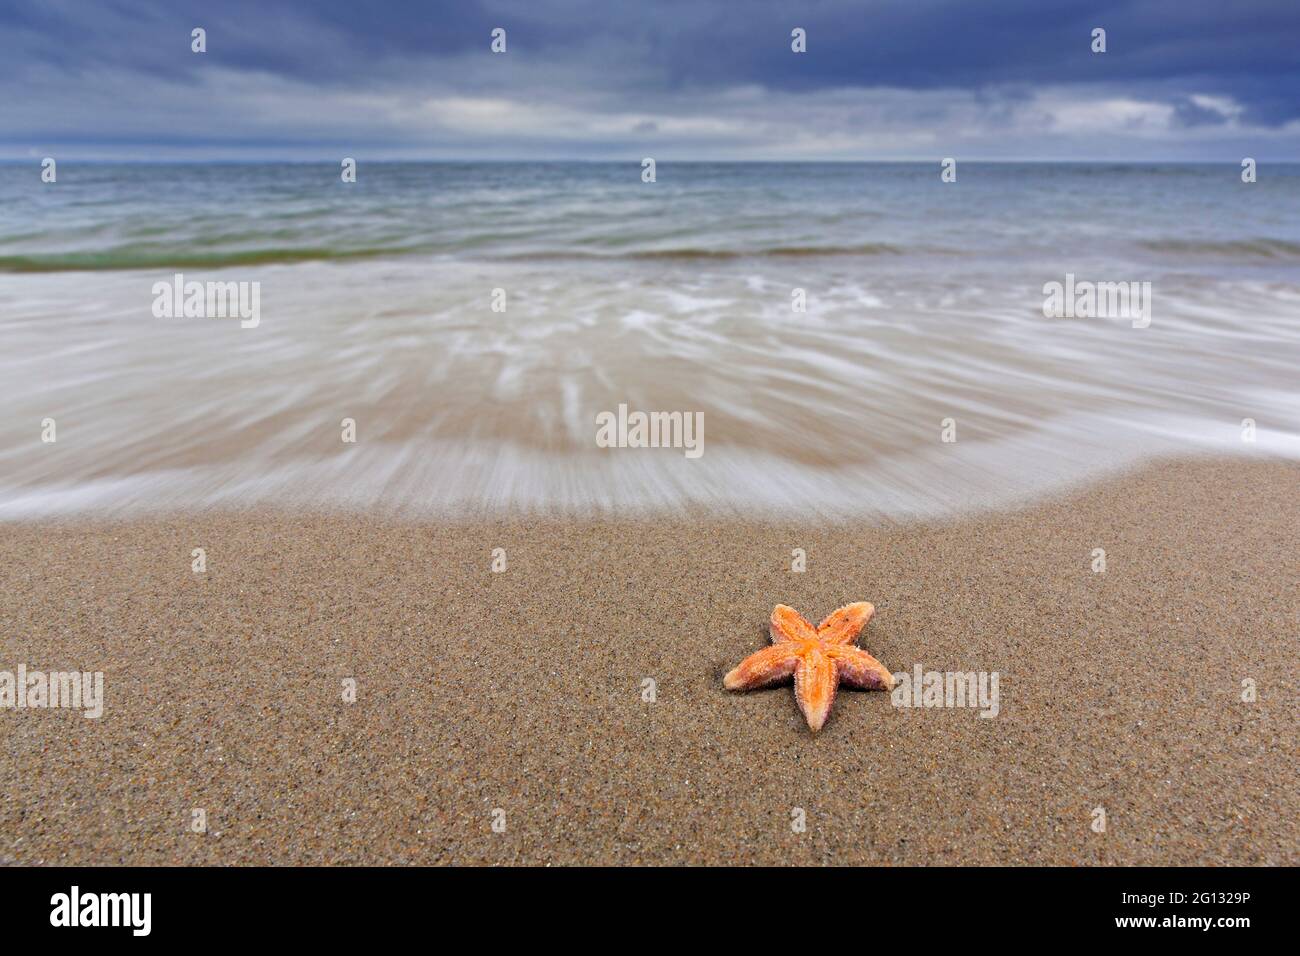 Dead common starfish / common sea star / sugar starfish (Asterias rubens) washed ashore on sandy beach along the North Sea coast Stock Photo